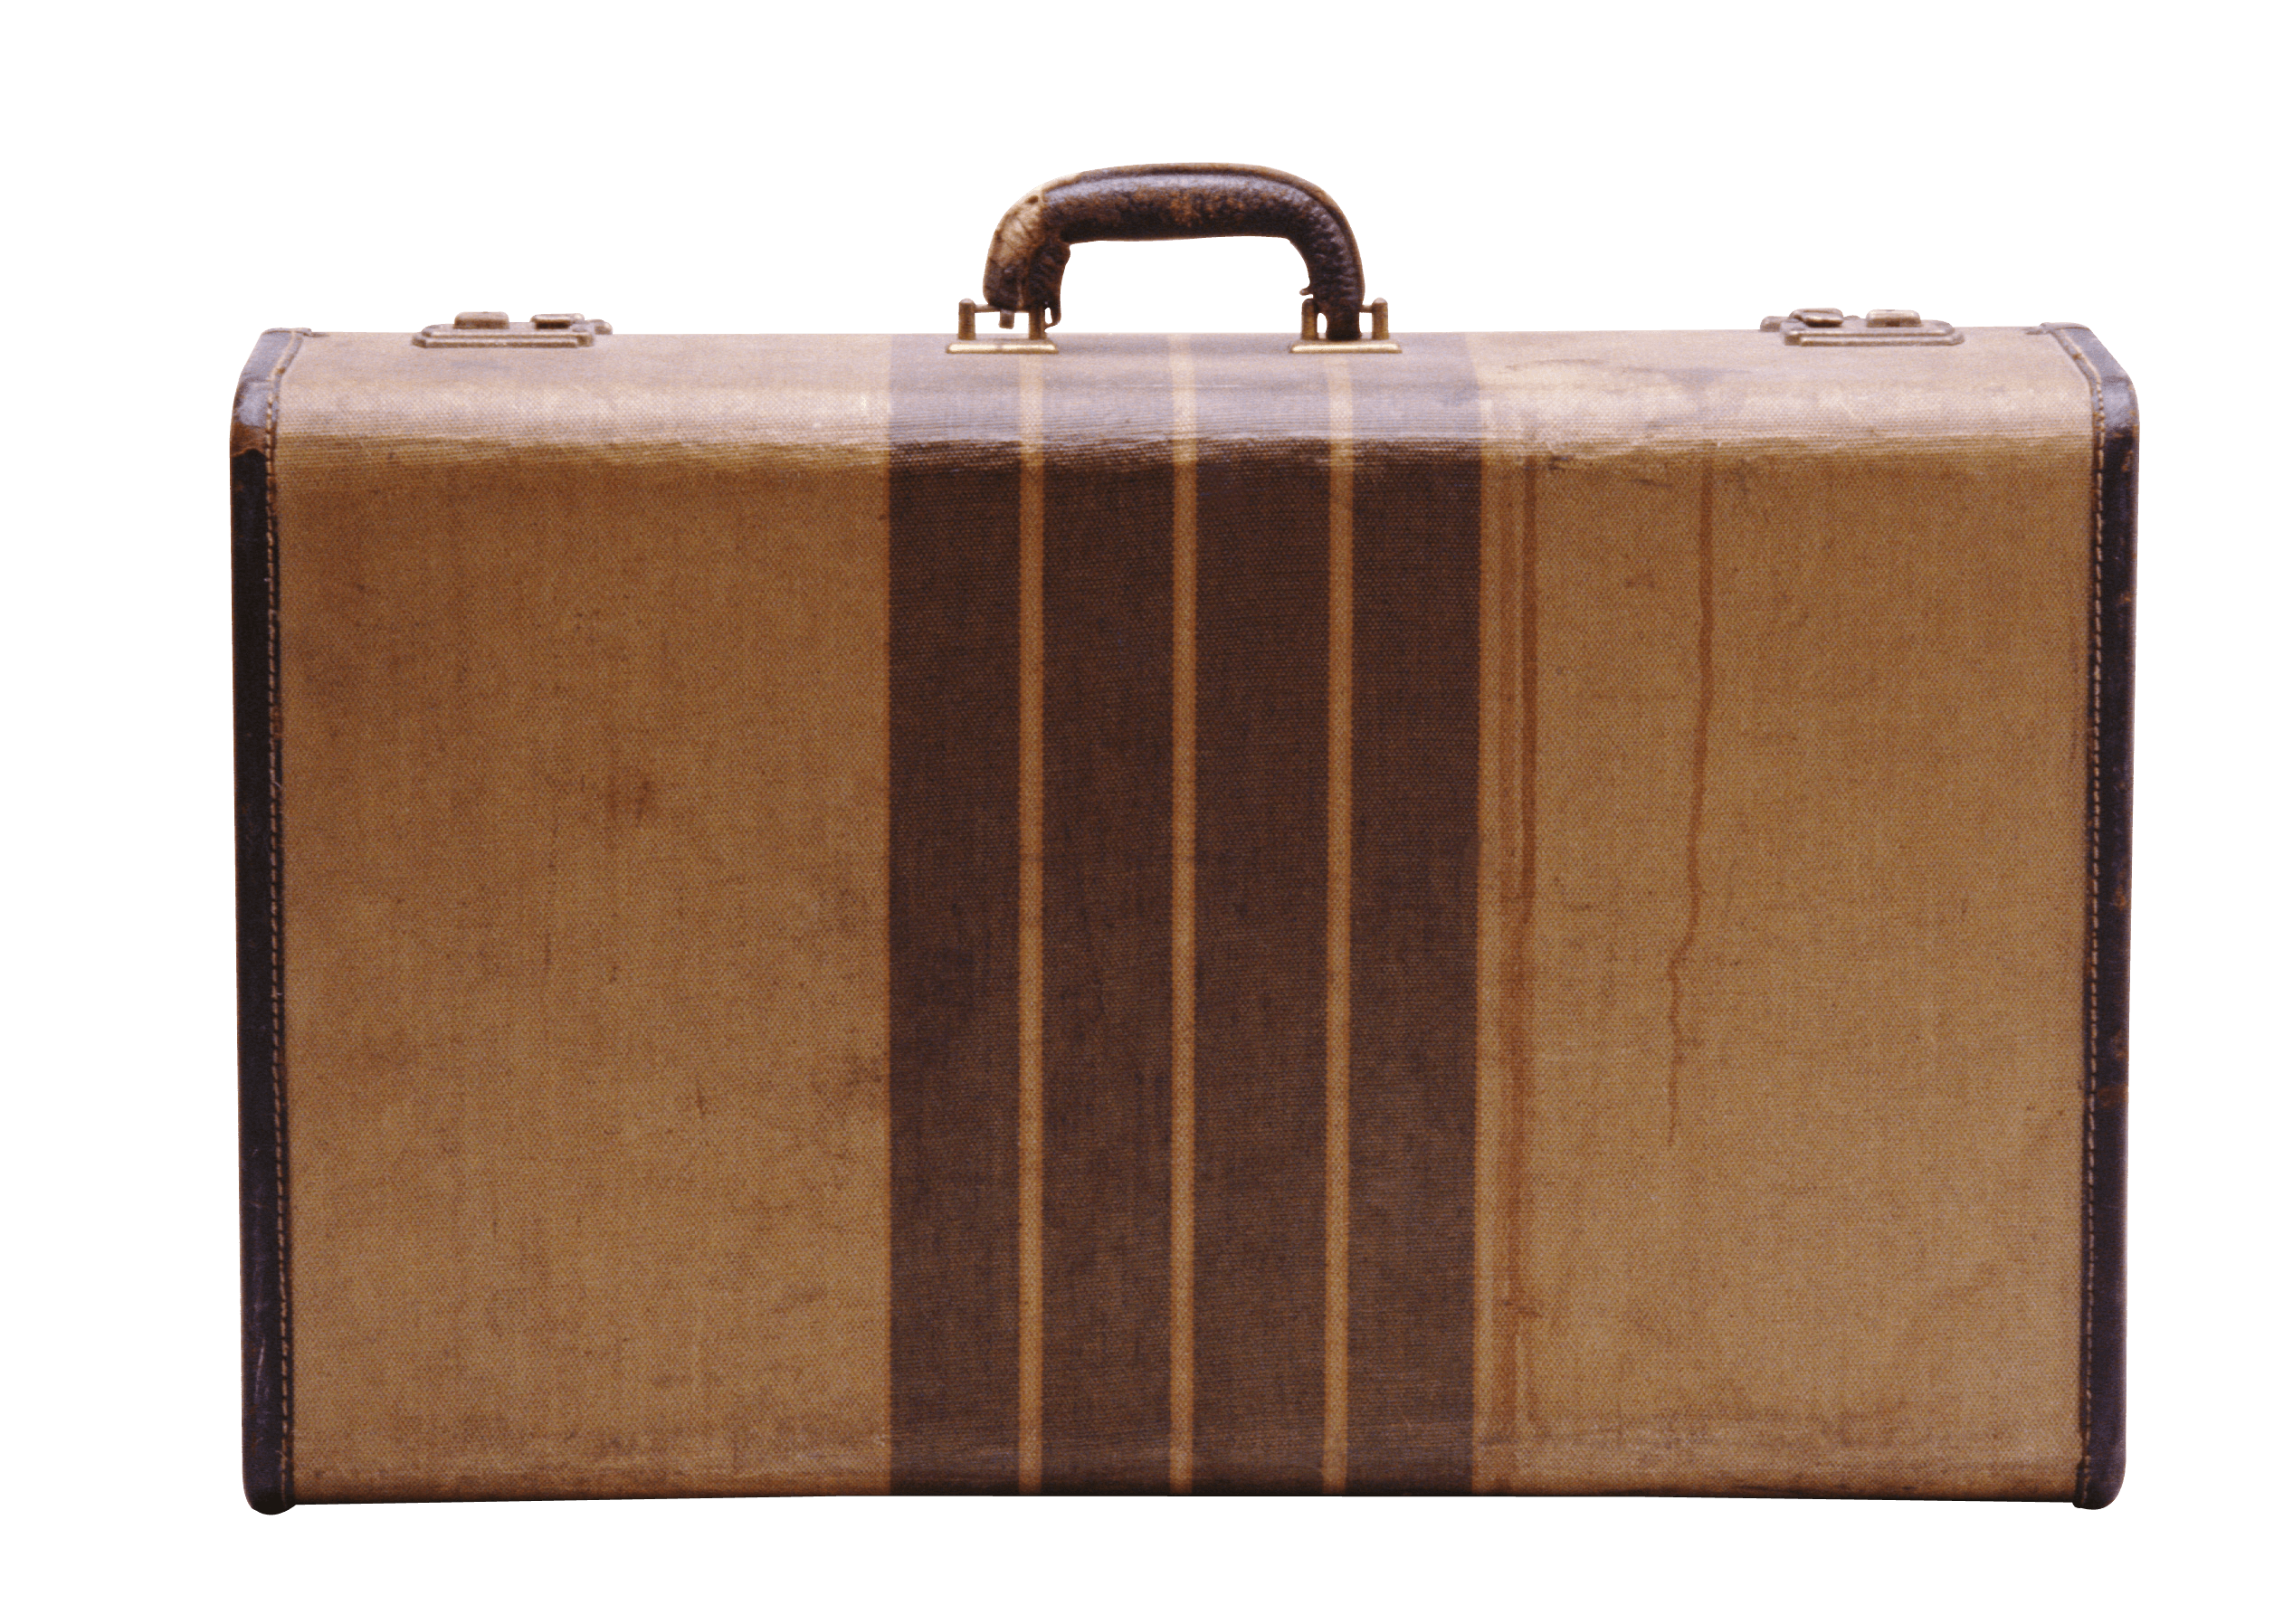 Vintage Cardboard Suitcase PNG Photo pngteam.com